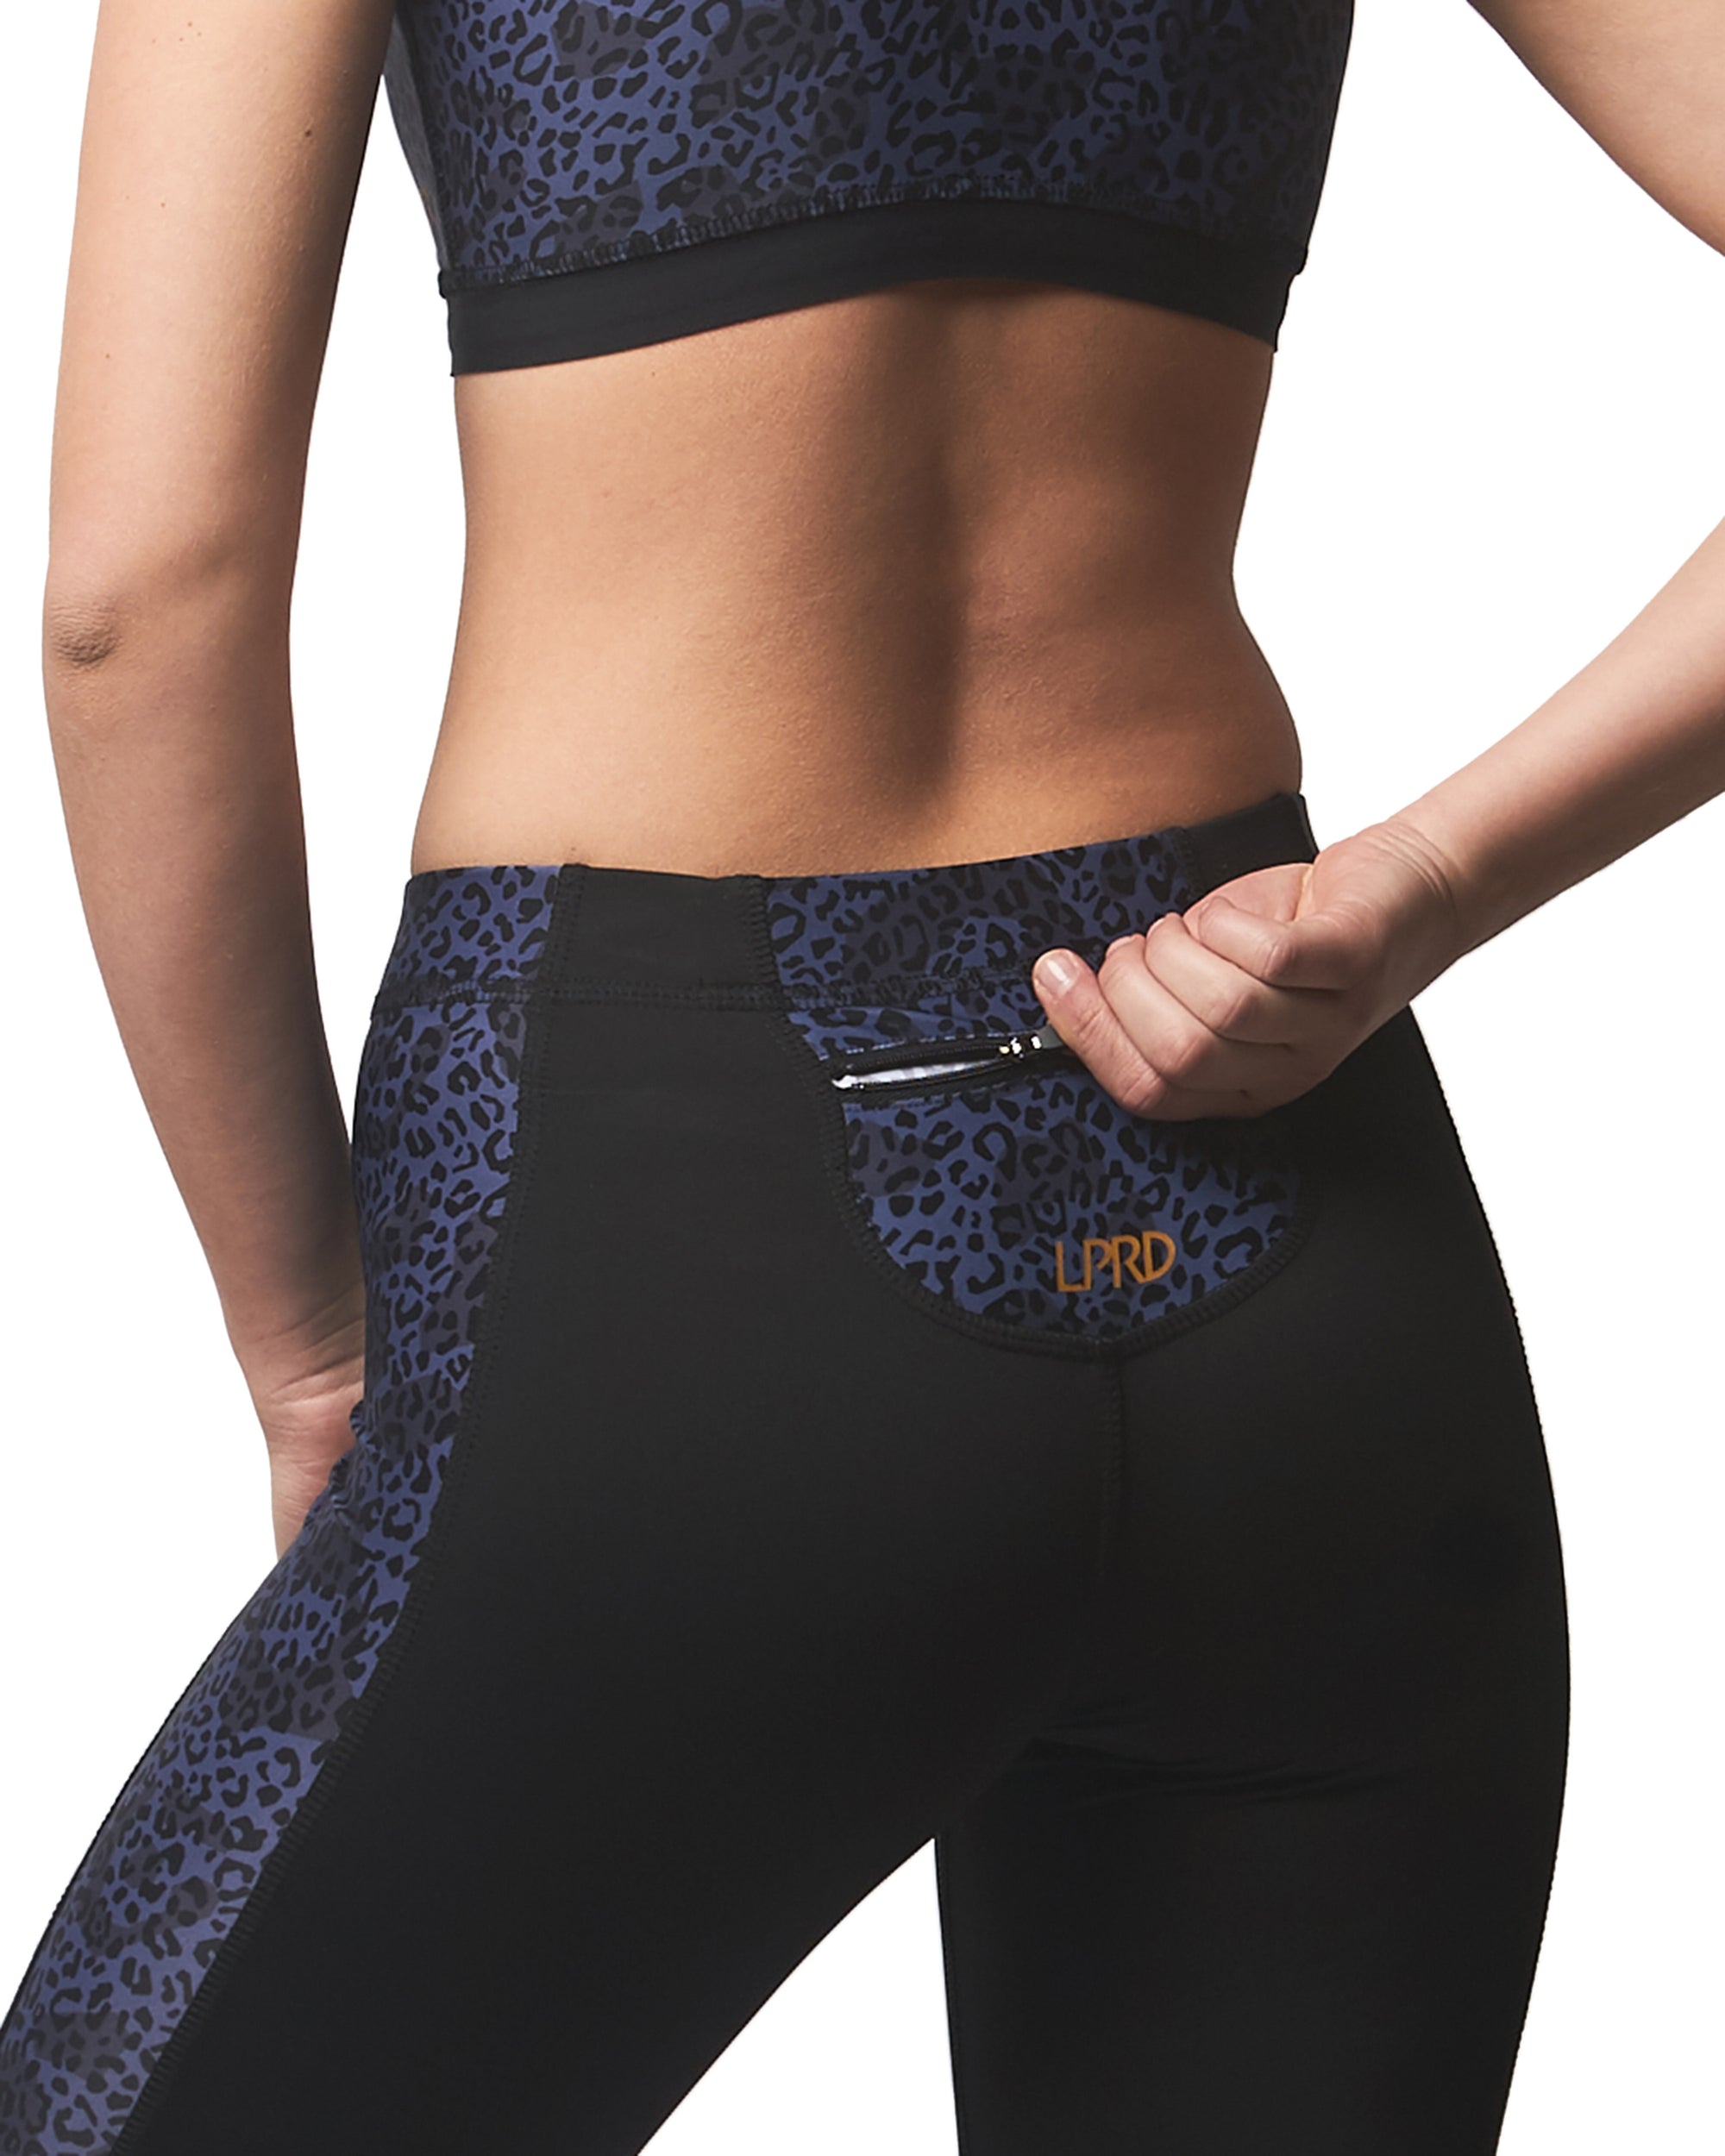 Leopard Print Leggings w/ Pockets Medium High Waist Workout Yoga Running Gym  | eBay